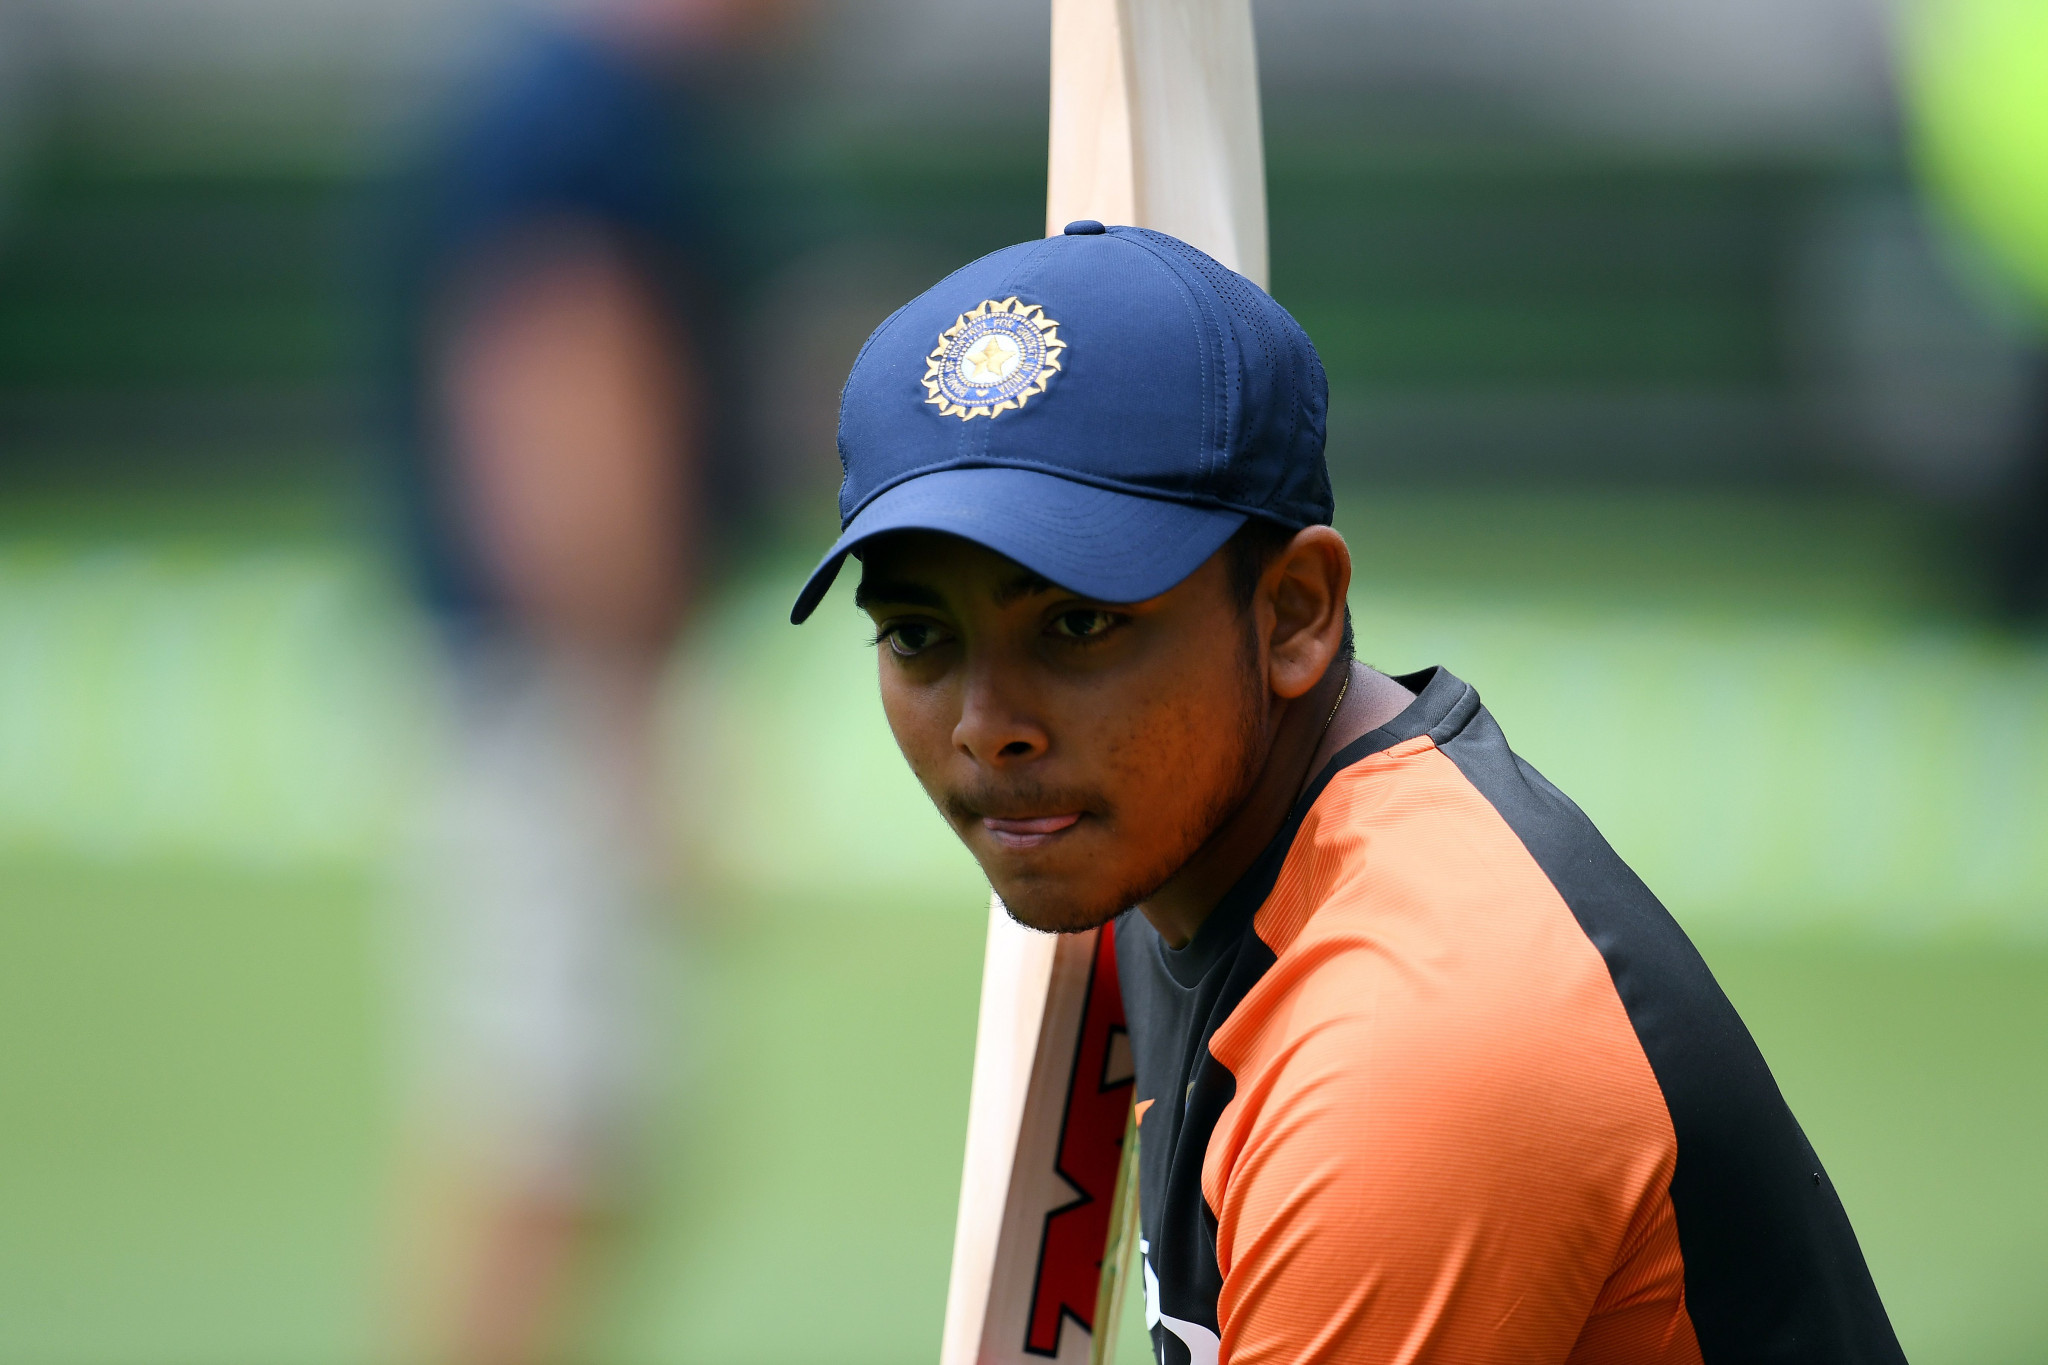 India batsman hailed as next Tendulkar banned after positive drugs test